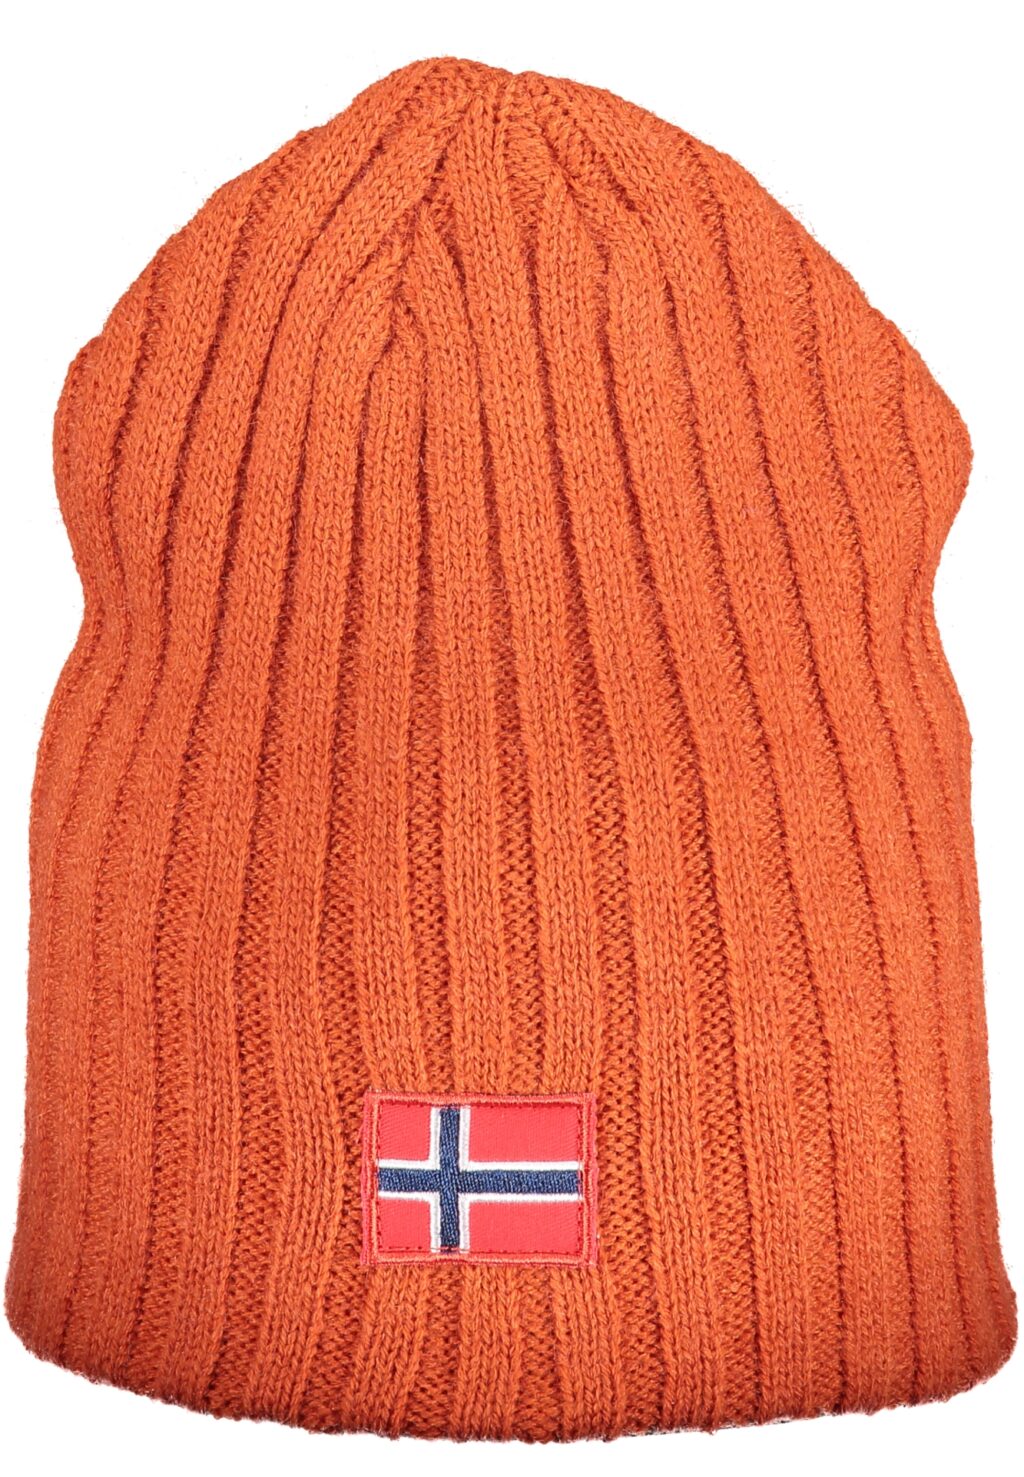 NORWAY 1963 MEN'S ORANGE CAP 120105_ARARANCION